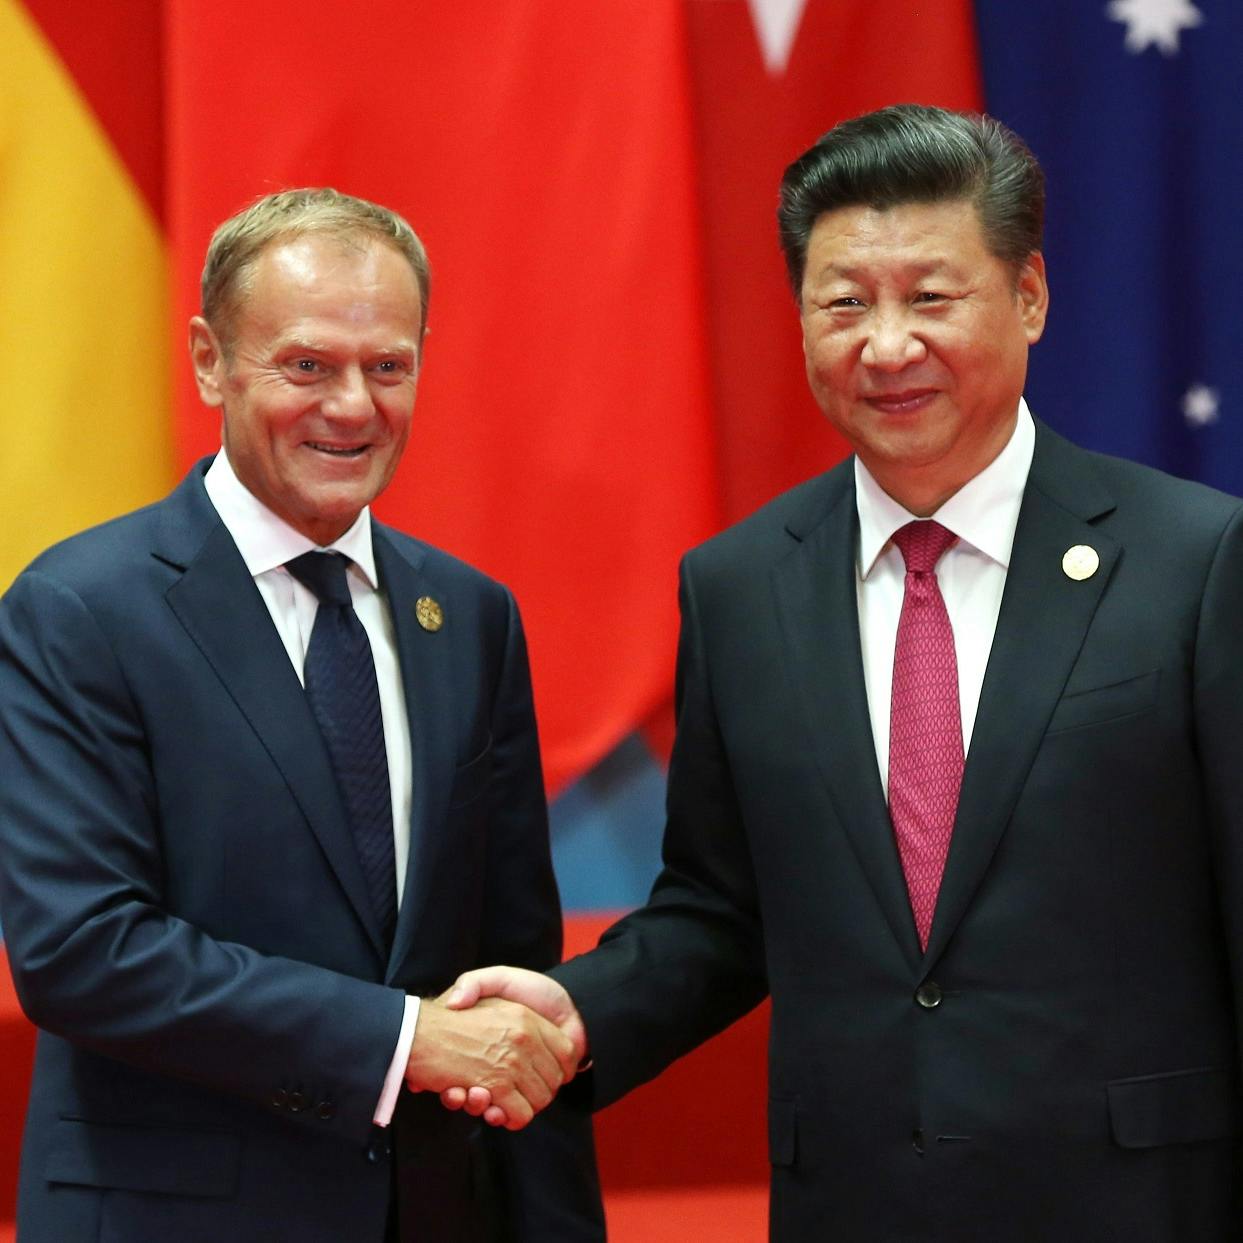 EU wil toegang China tot Europese markt aan banden leggen